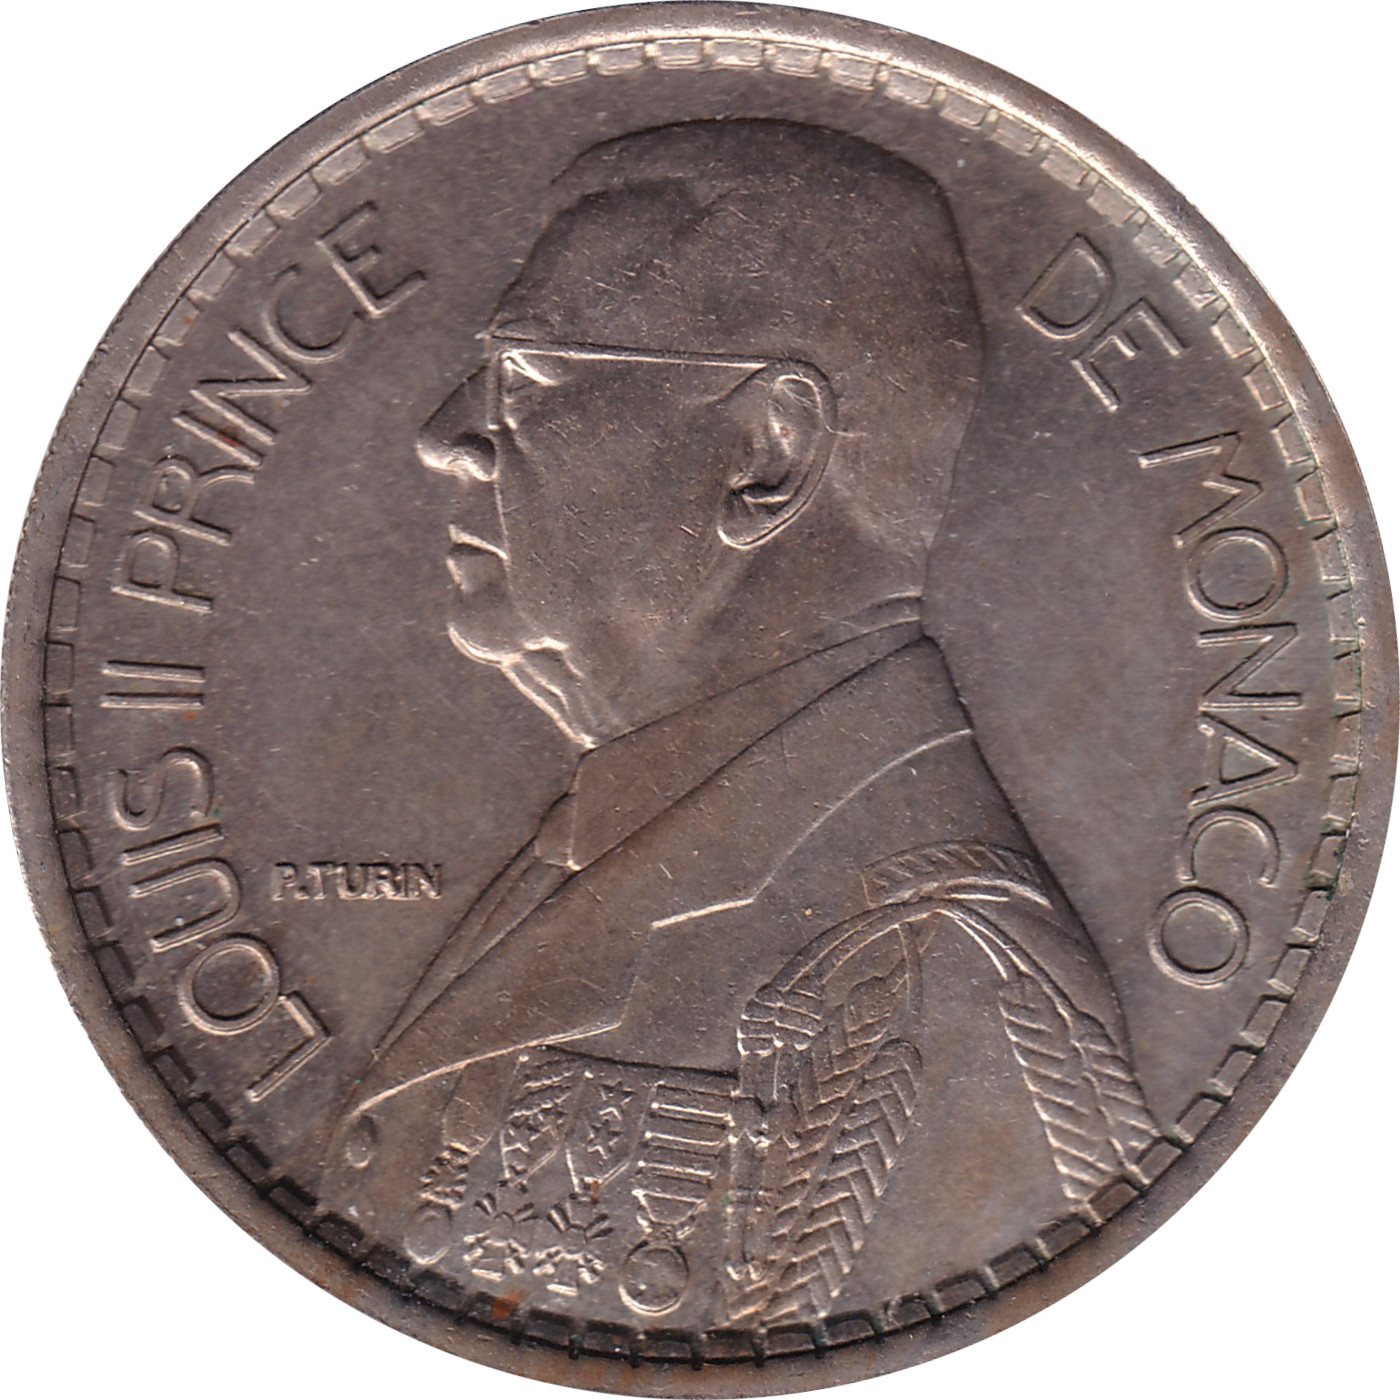 20 francs - Louis II